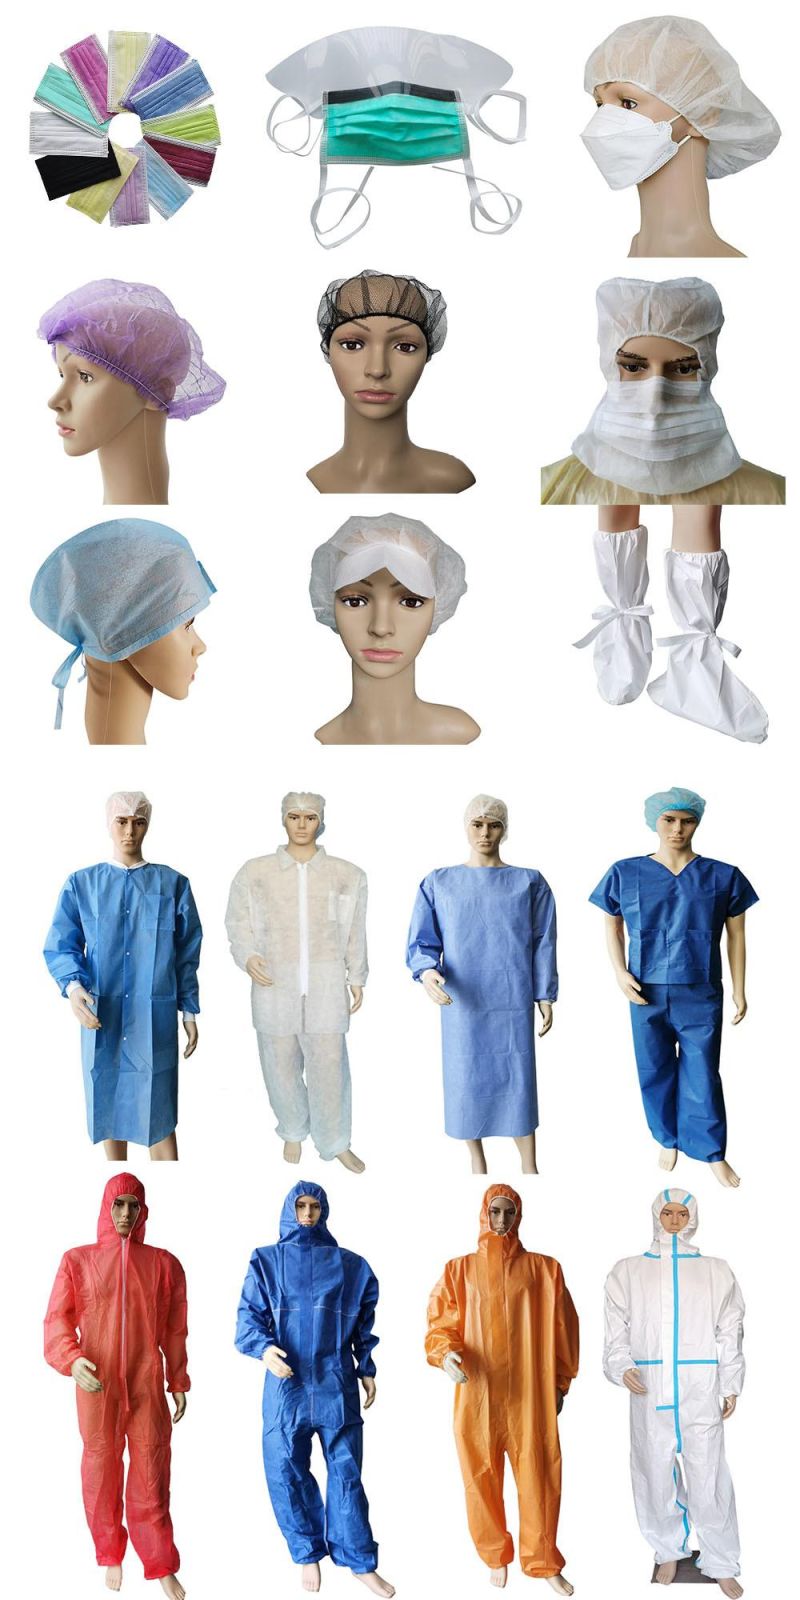 3 Ply Masker Face Maskss Disposable Blue Surgical Masks